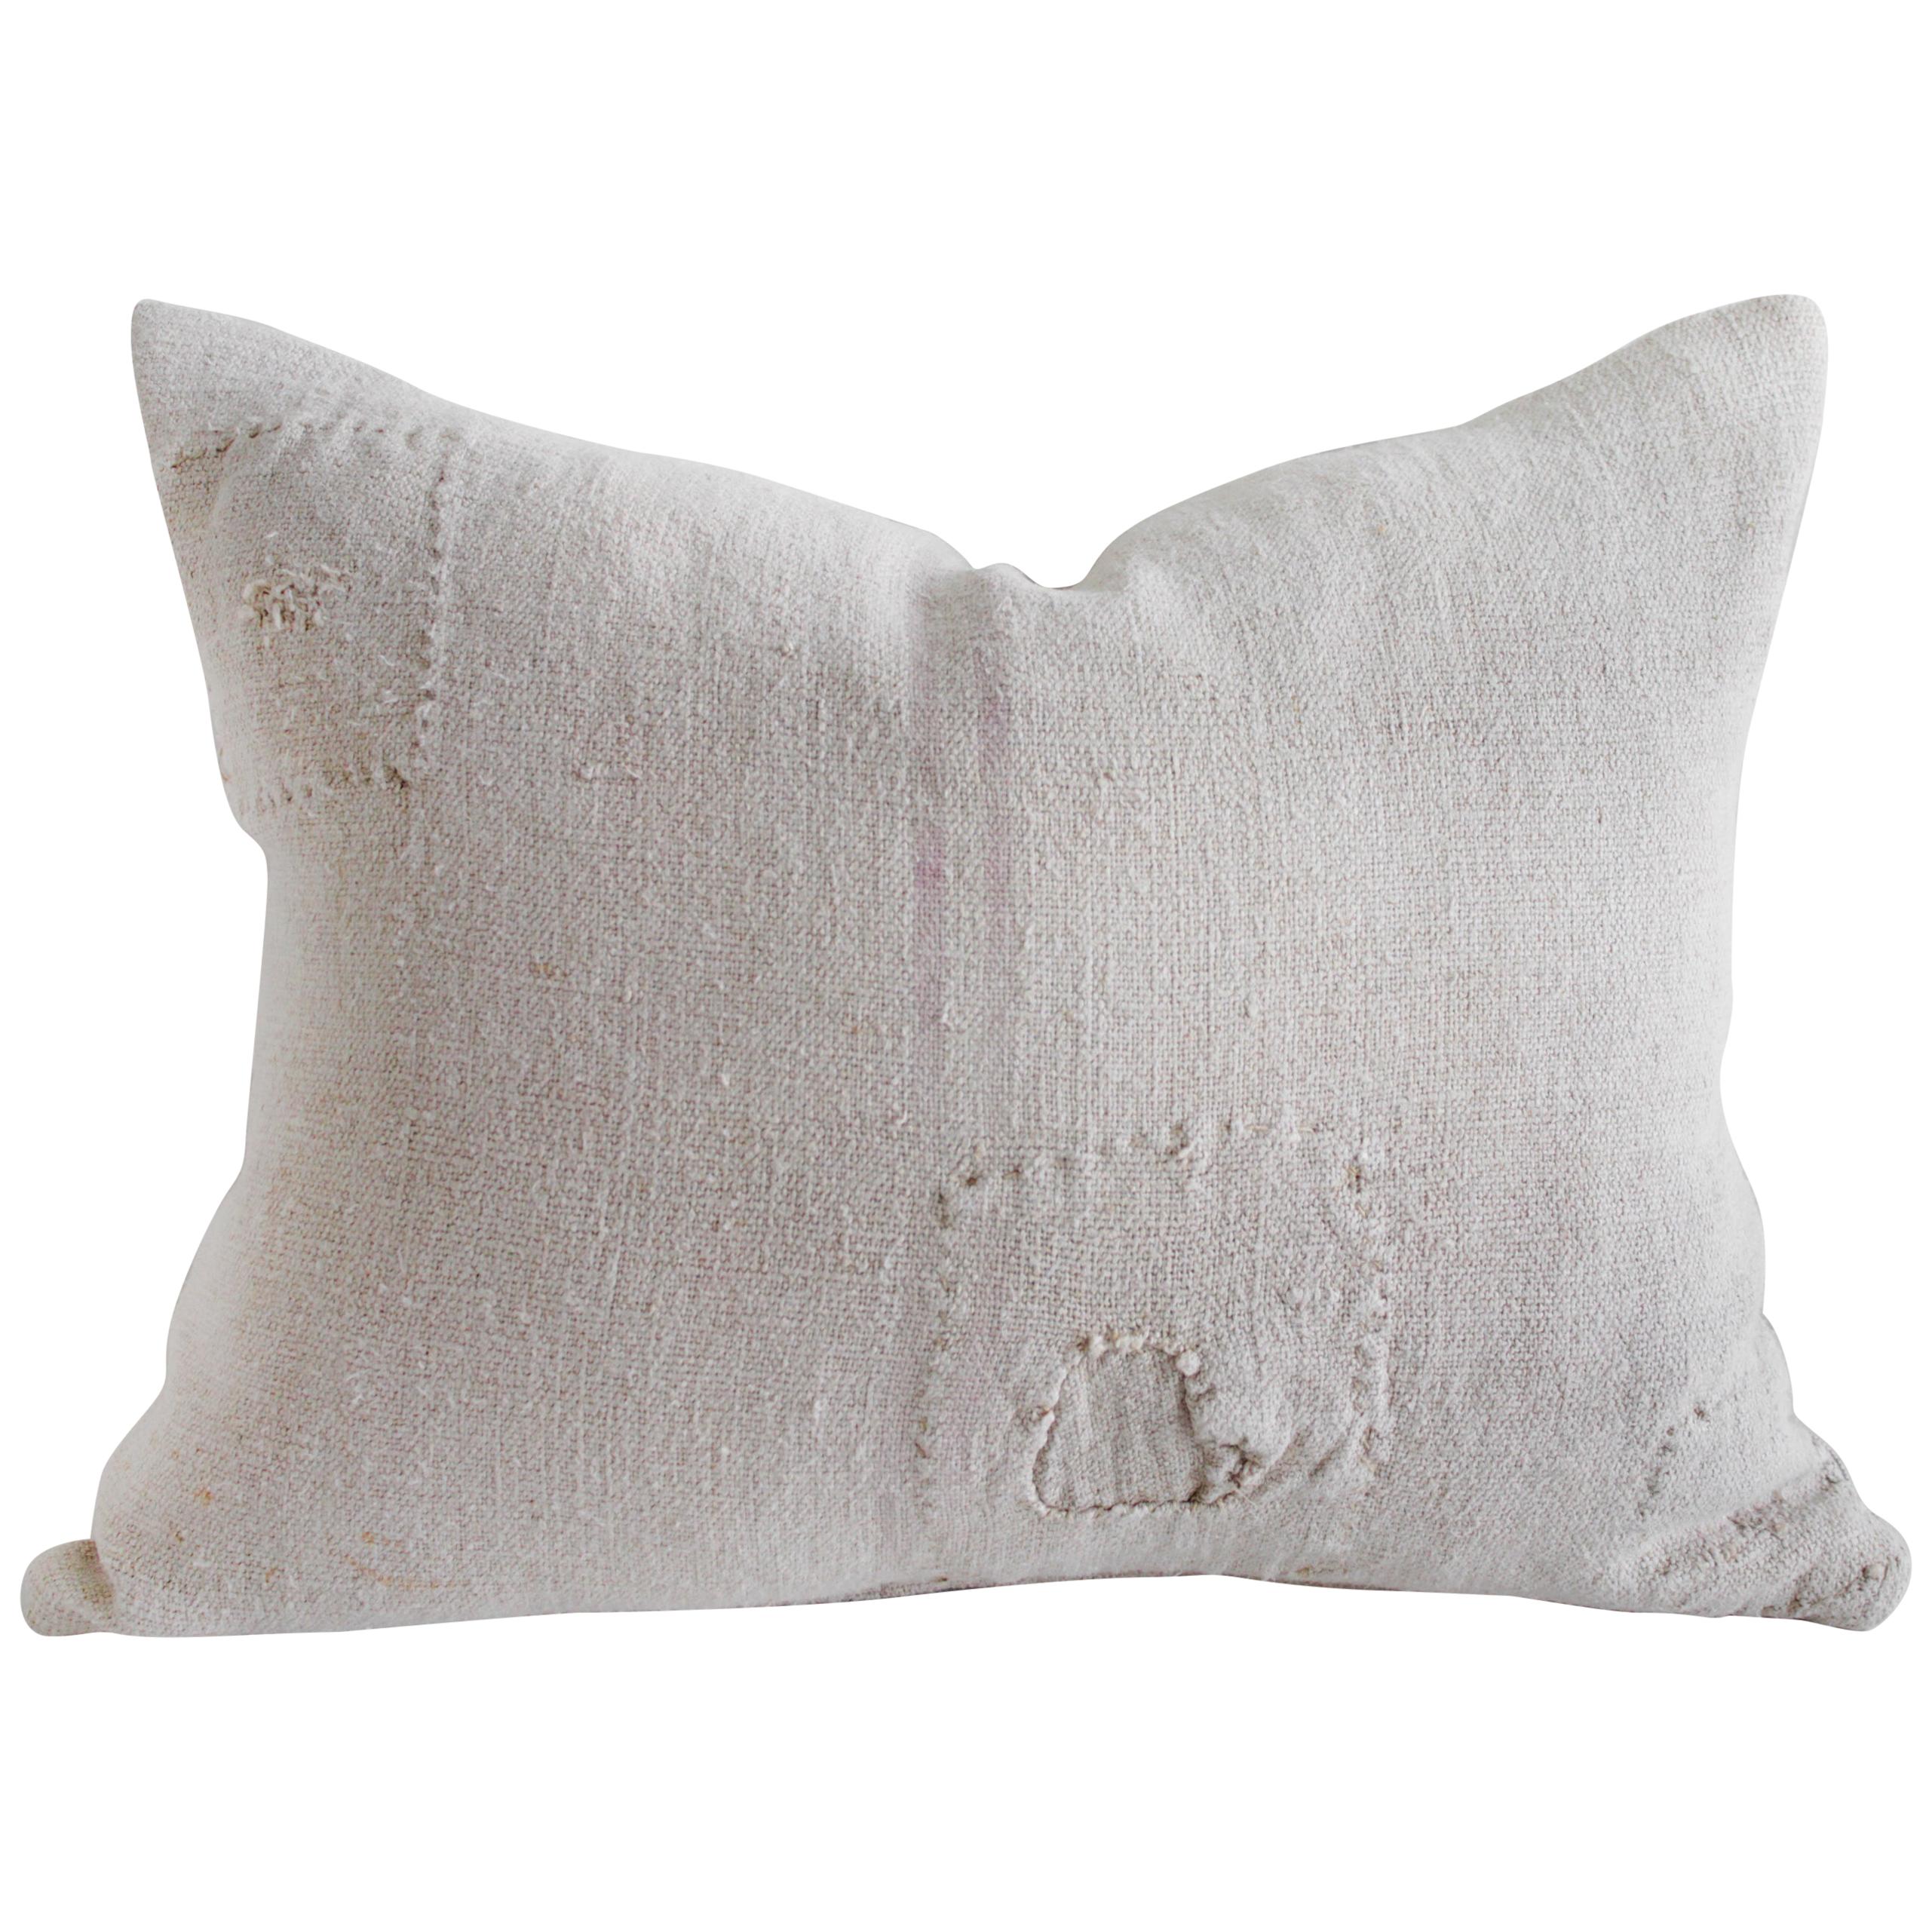 Vintage European Grain Sack Hemp Pillow with Pale Pink Stripes